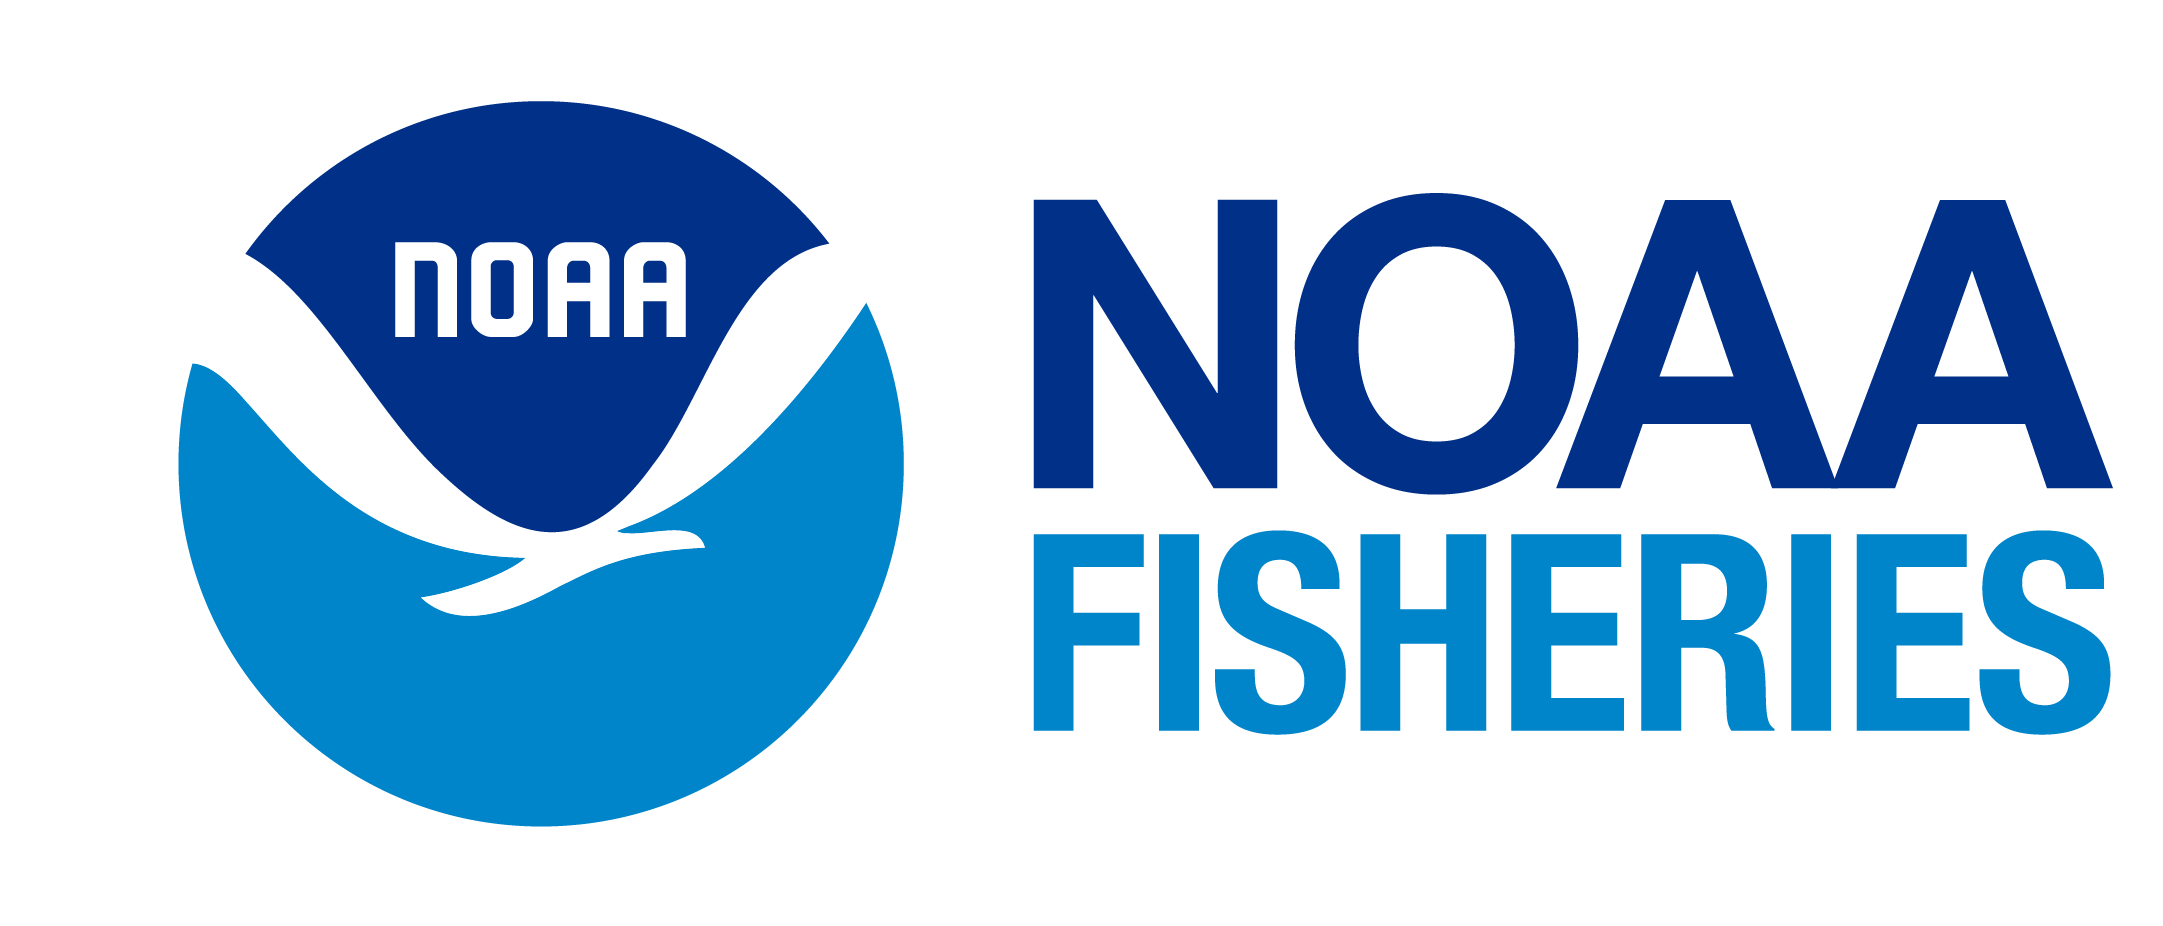 NOAA_FISHERIES_logoH.png